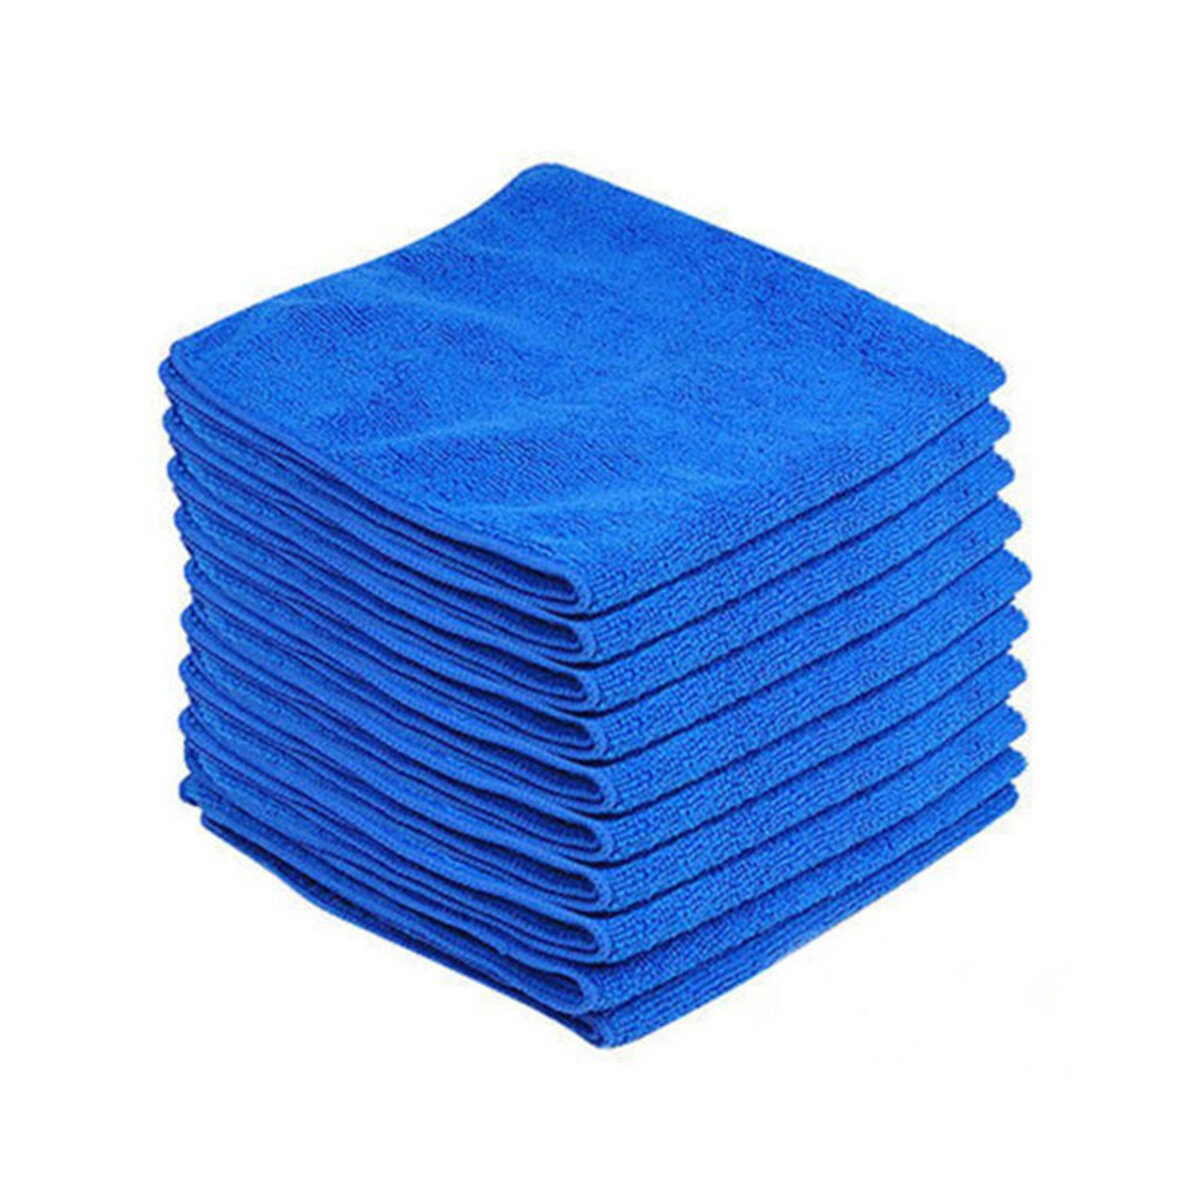 10PCS Microfiber Car Wash Cleaning Cloths Washing Towel Blue for Polishing Wax Detailing Drying